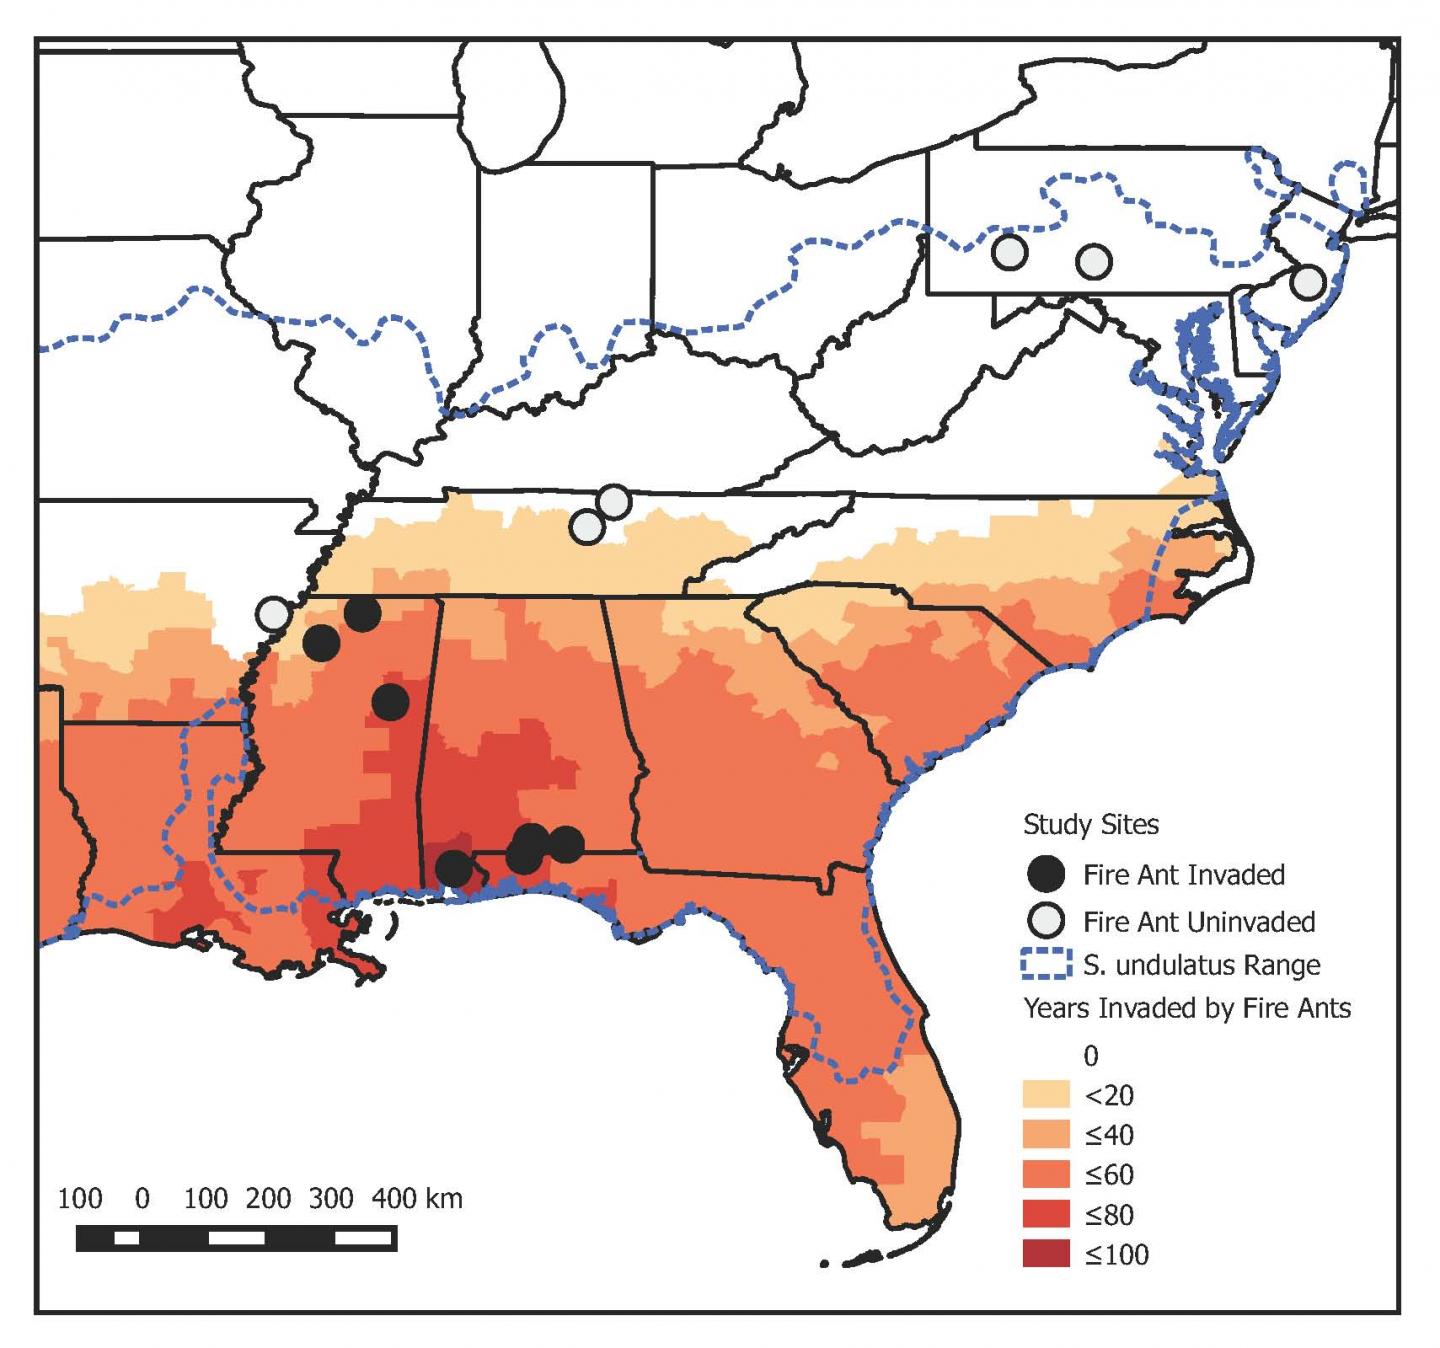 Fire Ant Lizard Map [IMAGE] EurekAlert! Science News Releases